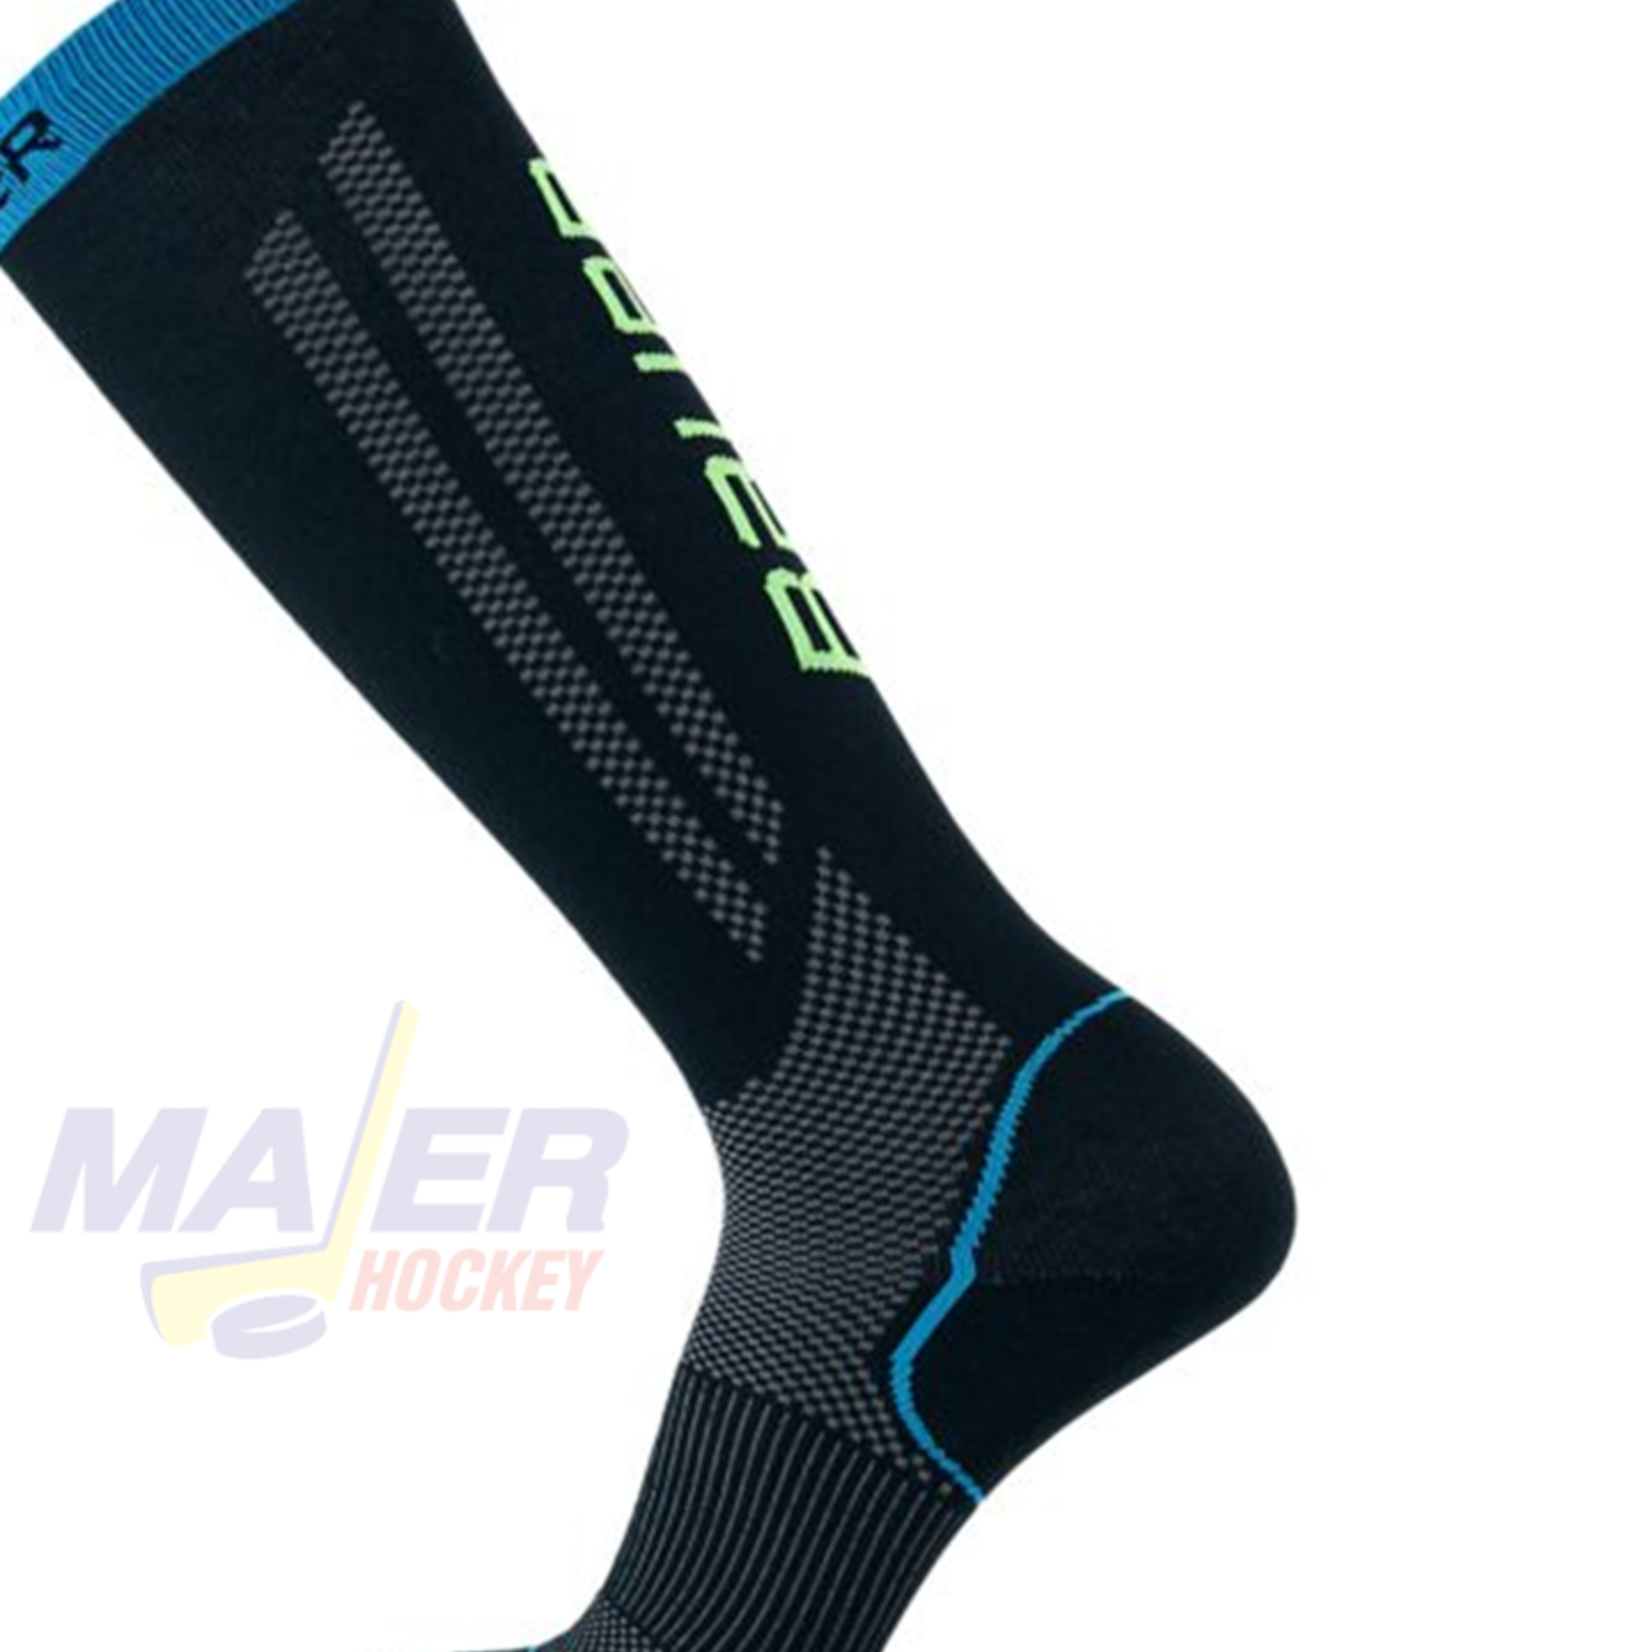 Bauer Performance Tall Skate Socks